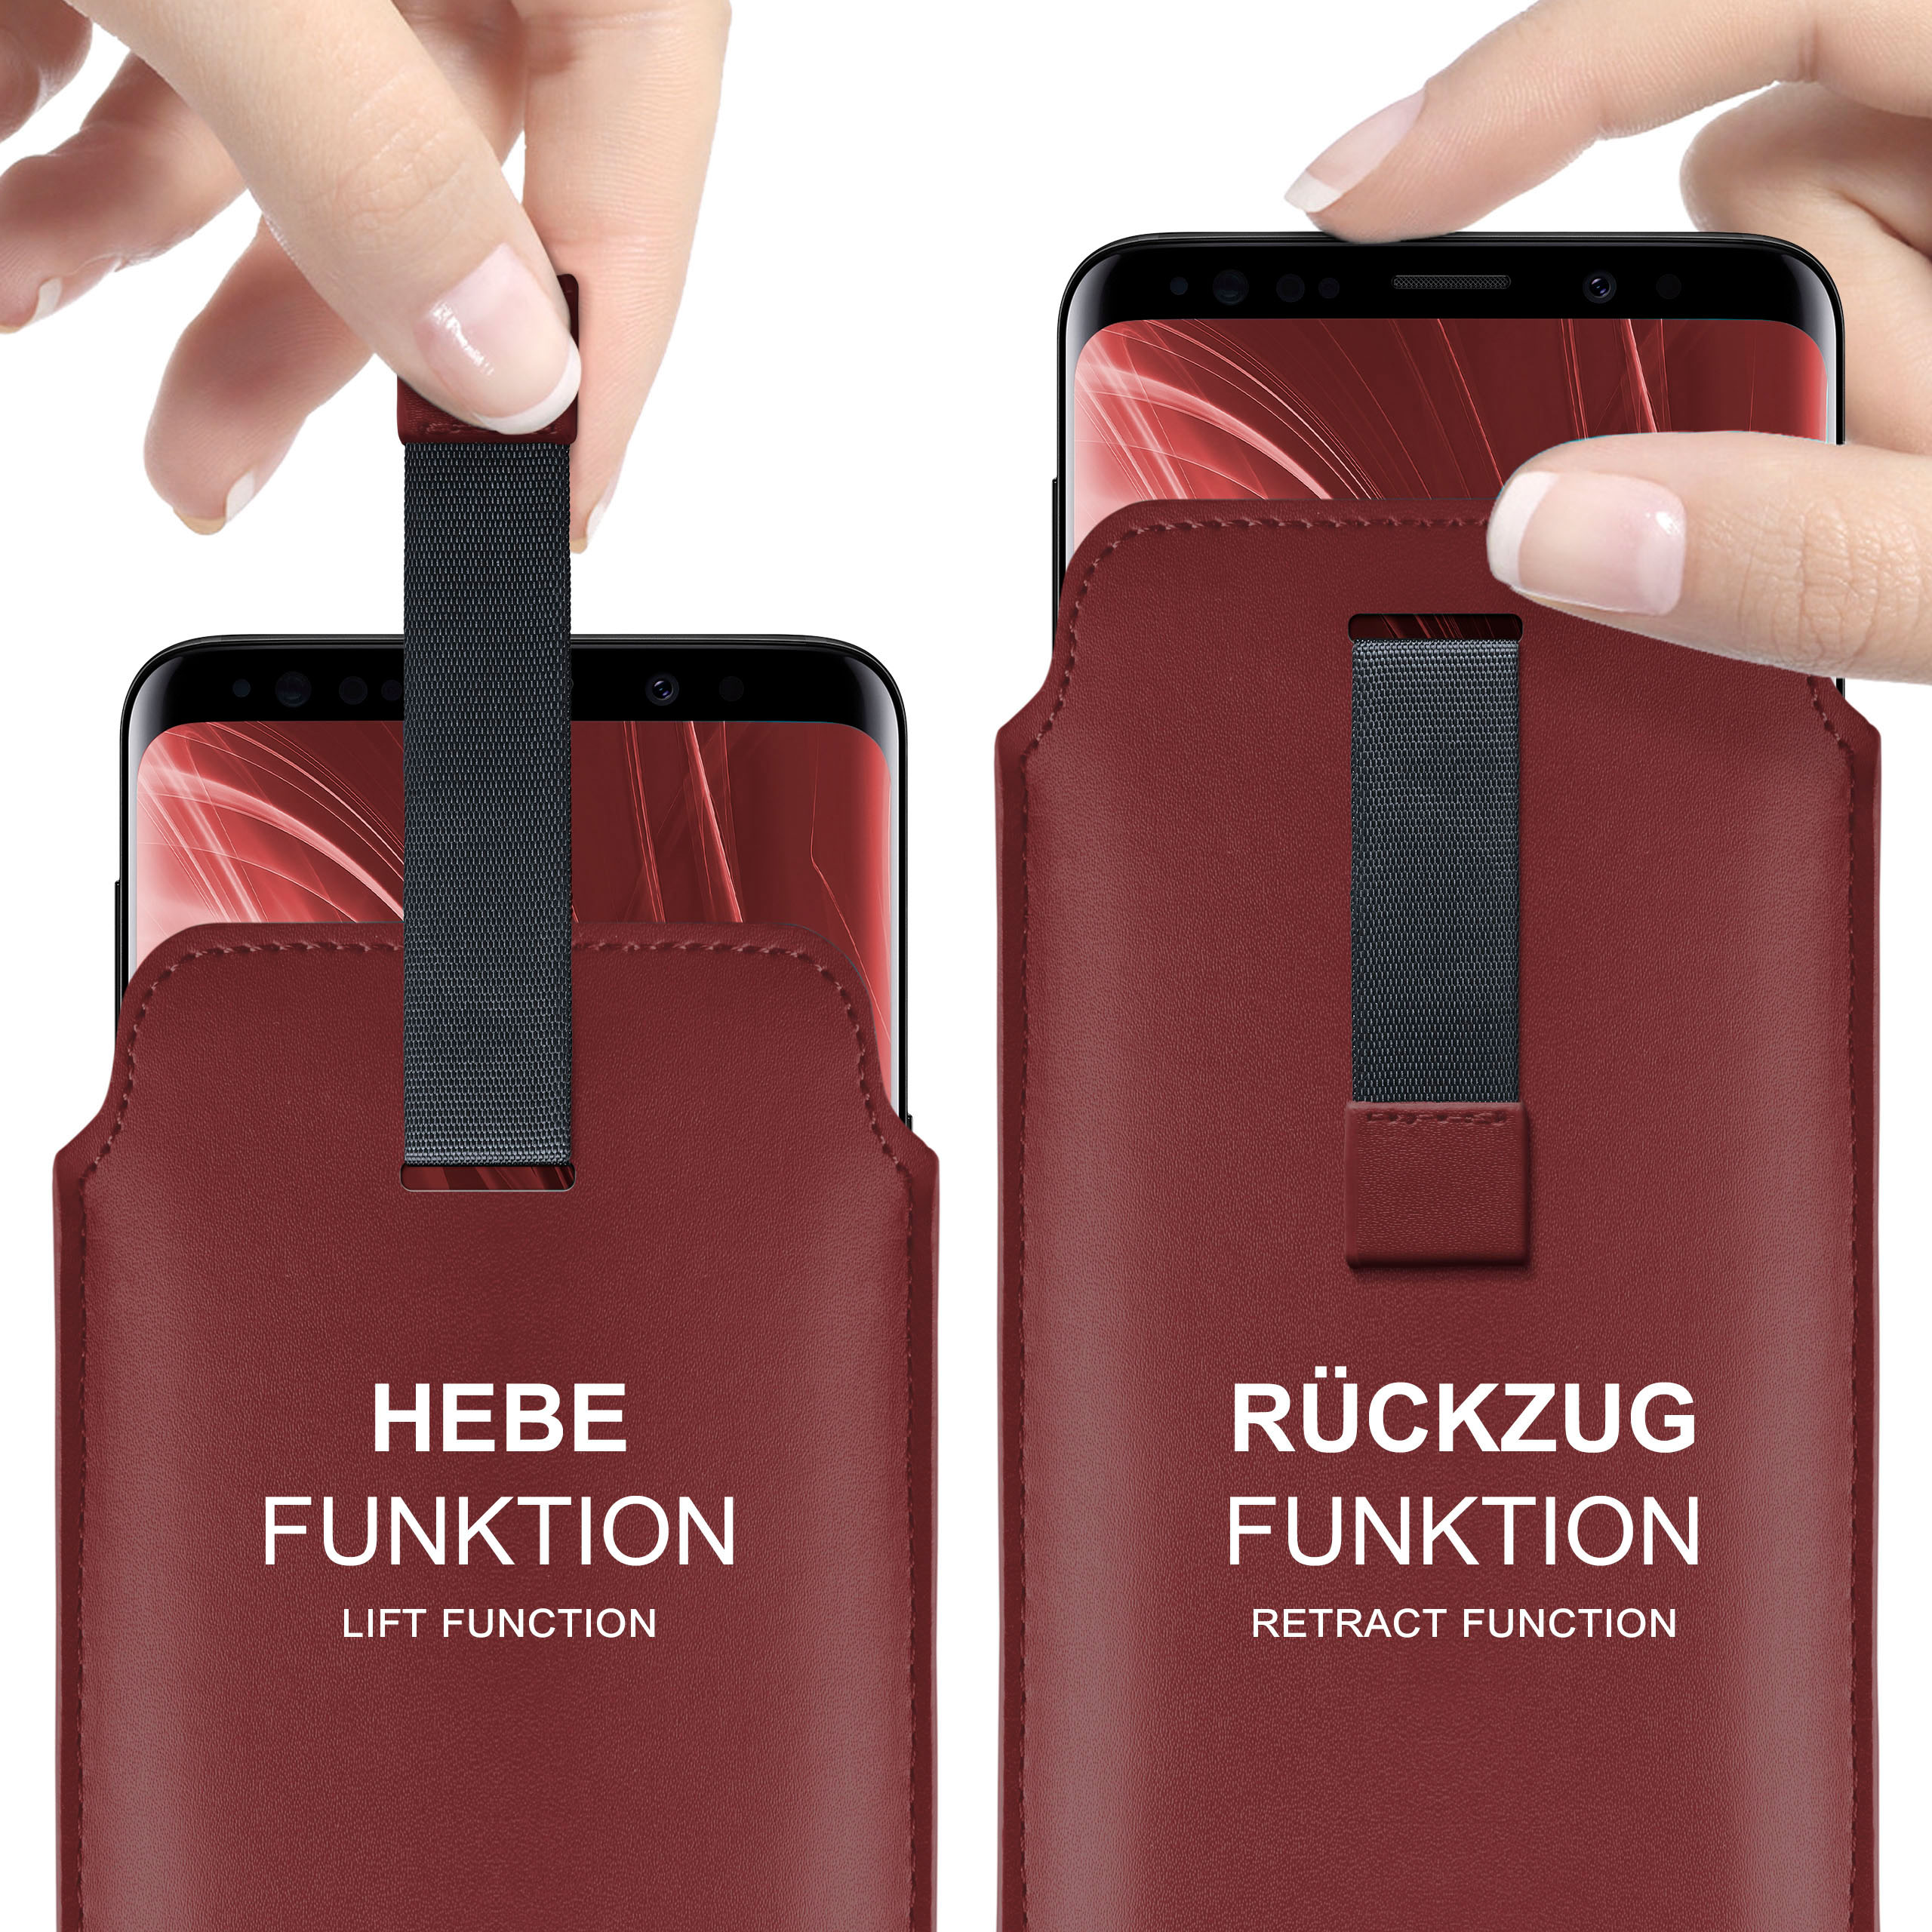 MOEX Slide Case, Full Cover, Zest Acer, Plus, Maroon-Red Liquid